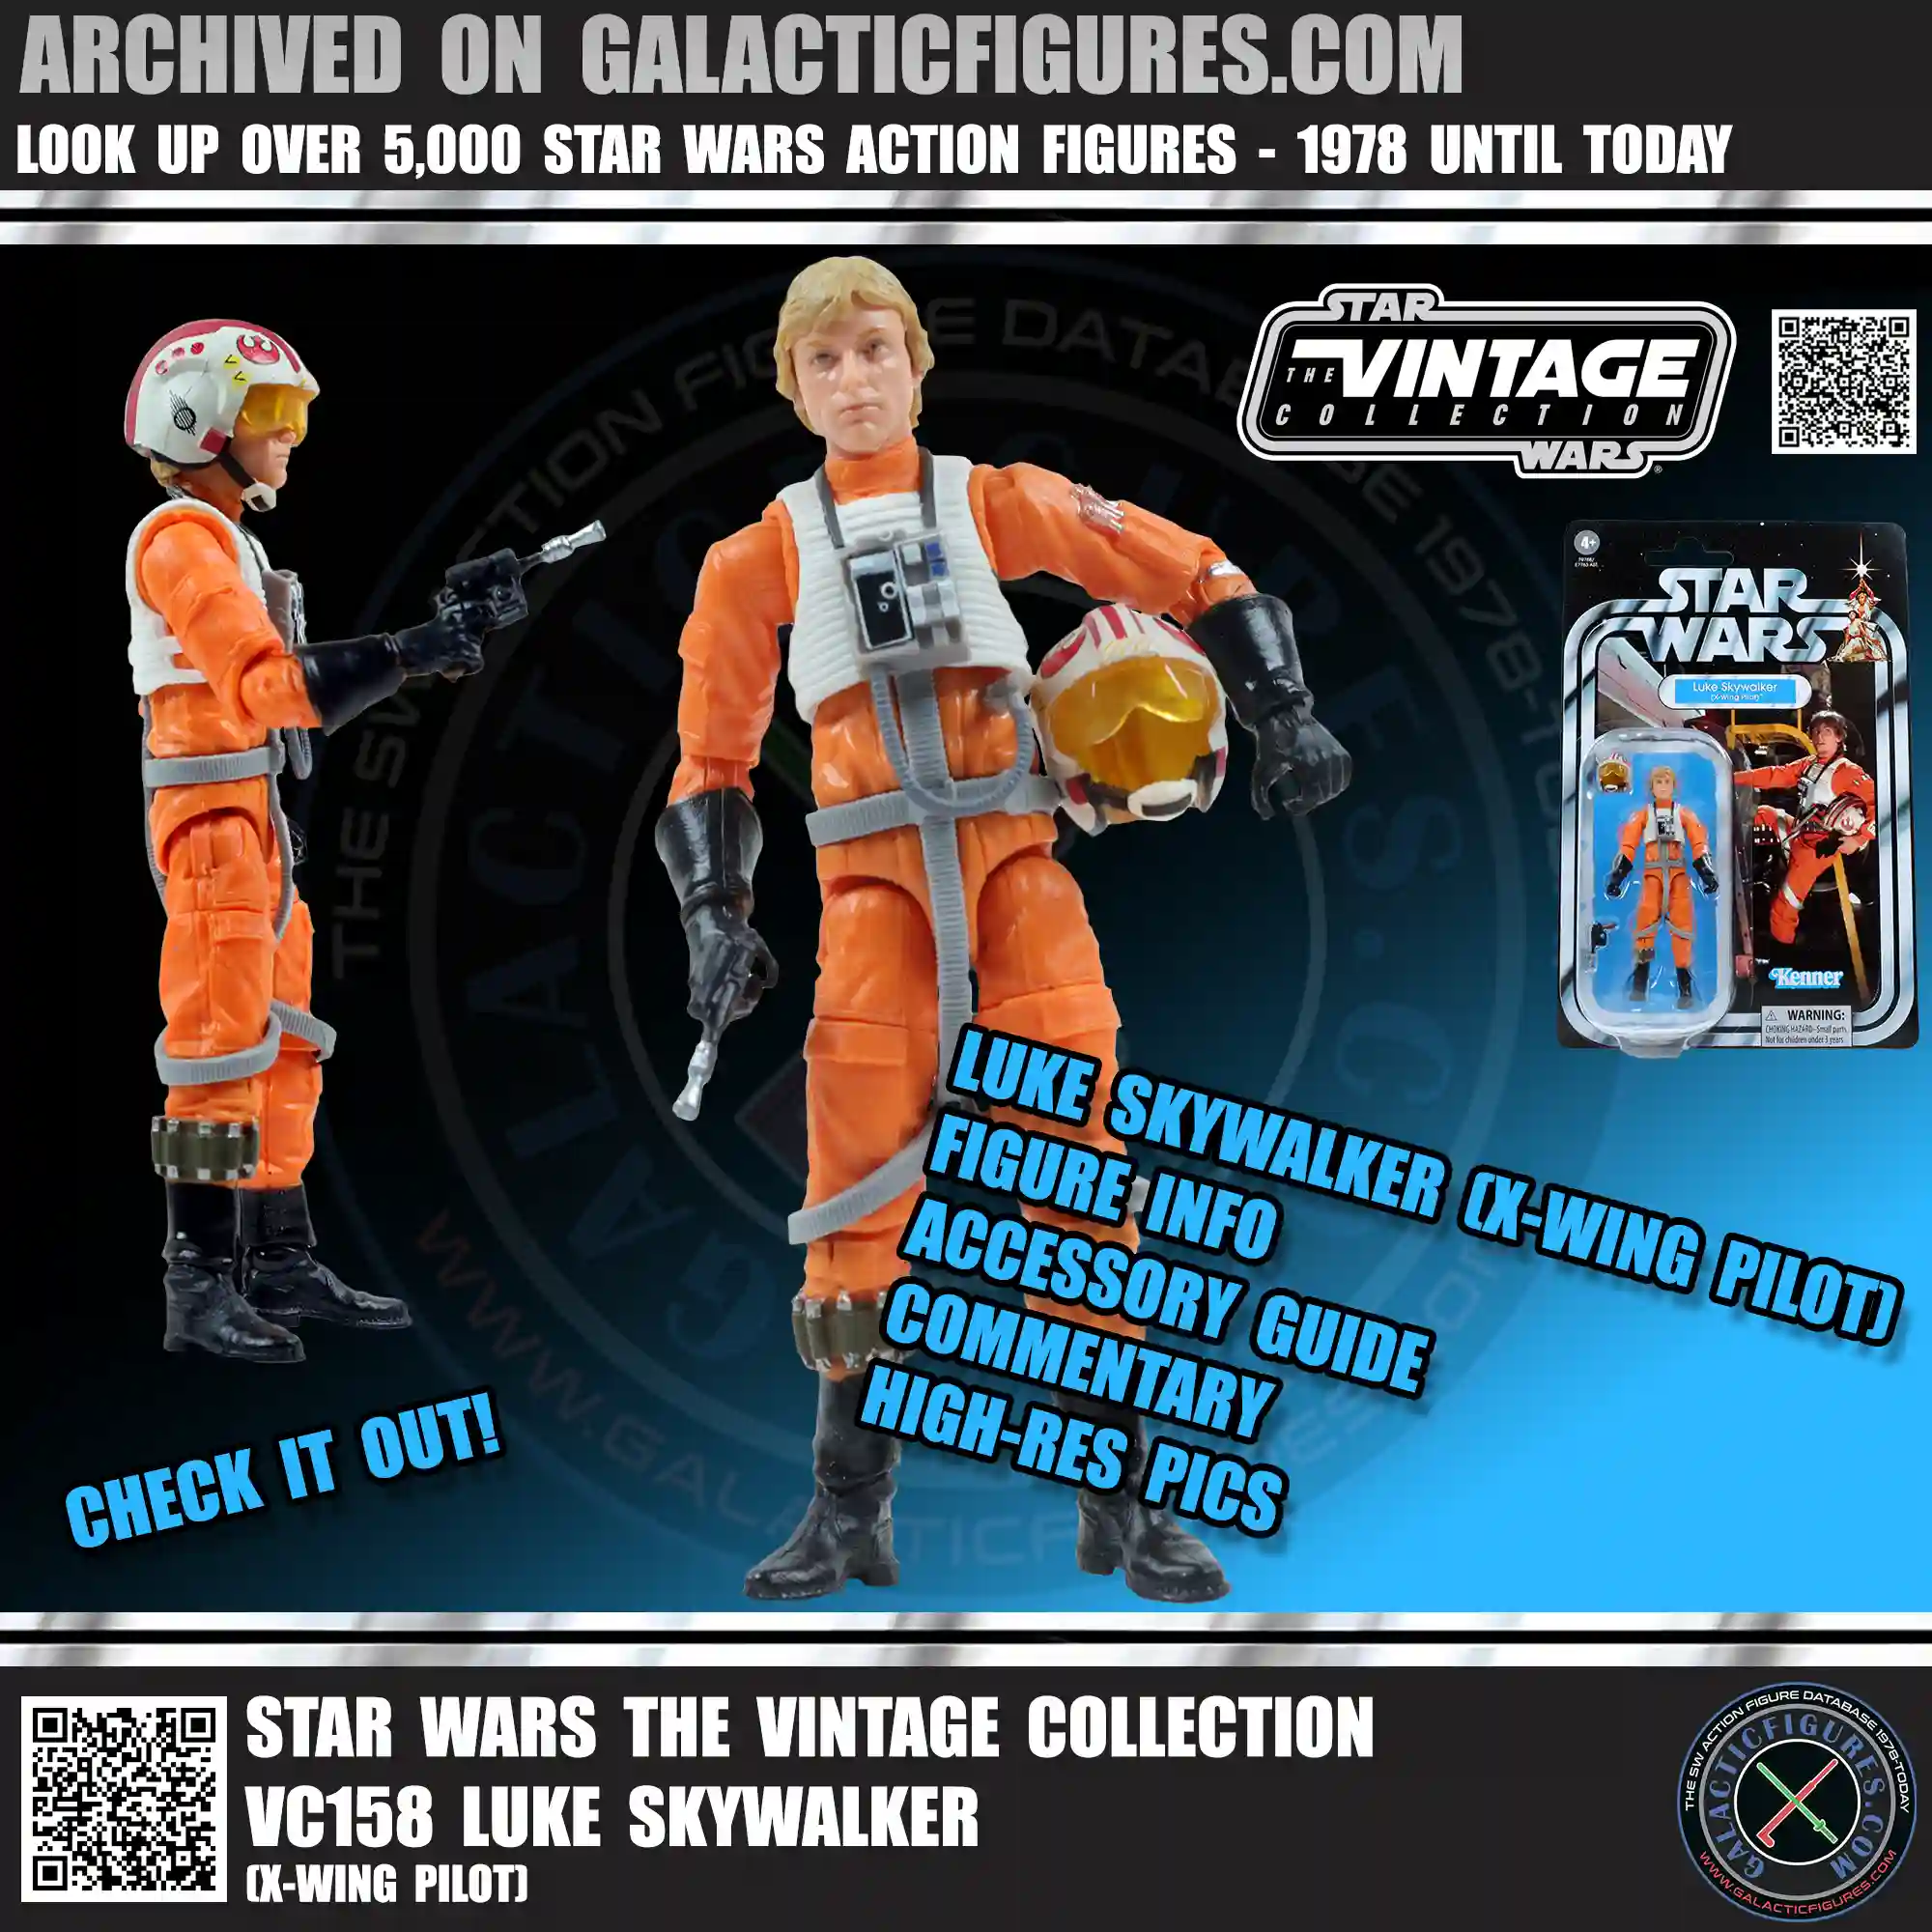 Luke Skywalker (X-Wing Pilot) VC158 Archived